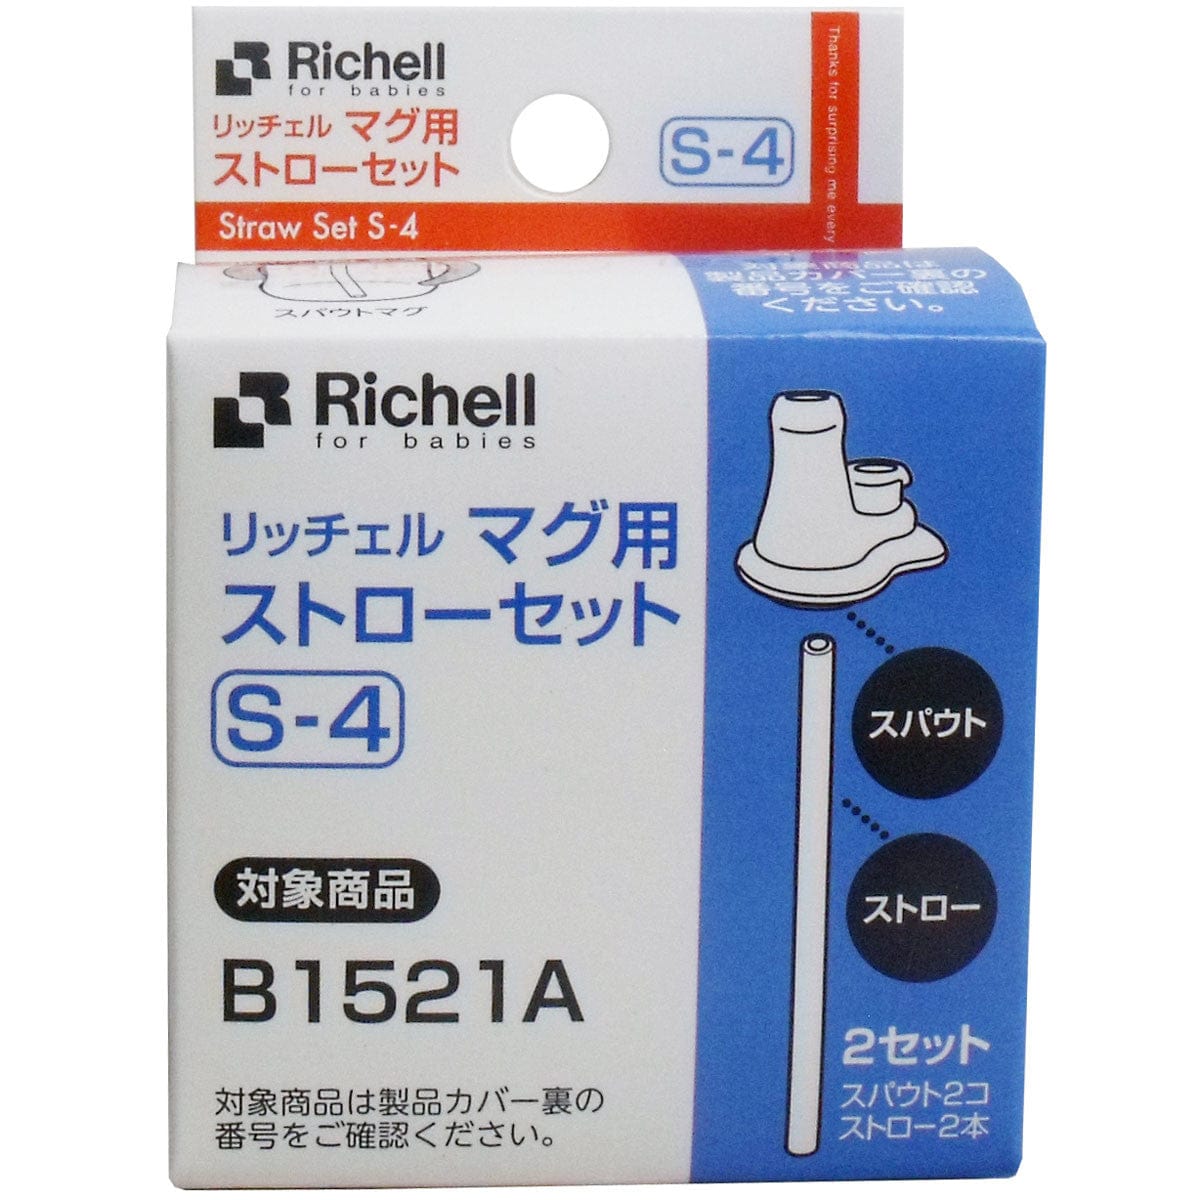 Richell - Aqulea Baby Straw Cup Mug S-4 Replacement Straw Set Spare Parts -  Richell Baby Spare Parts  Durio.sg